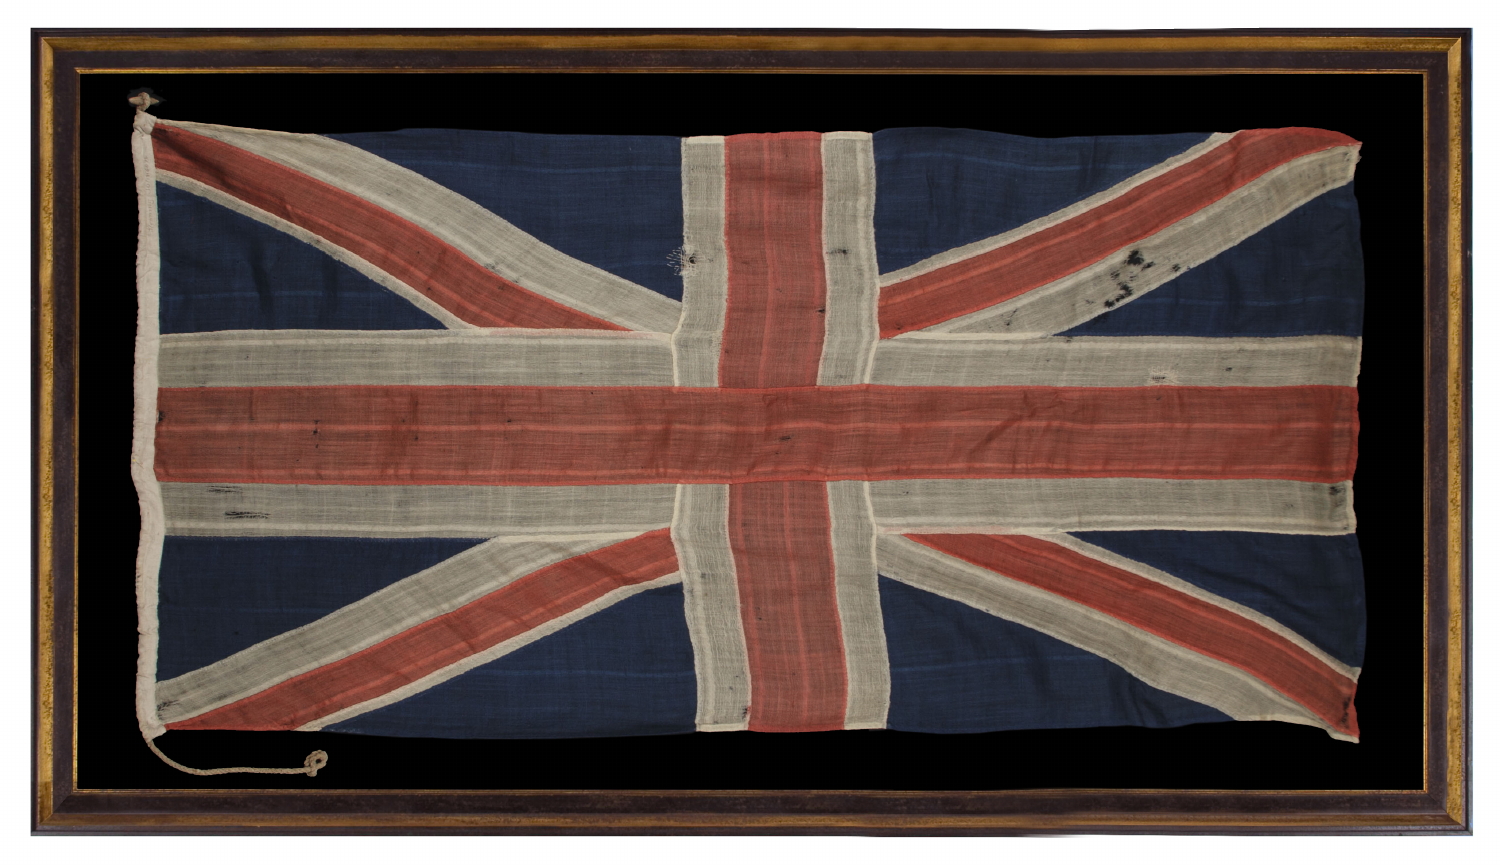 UK Union Jack Flag Leggings by Flags